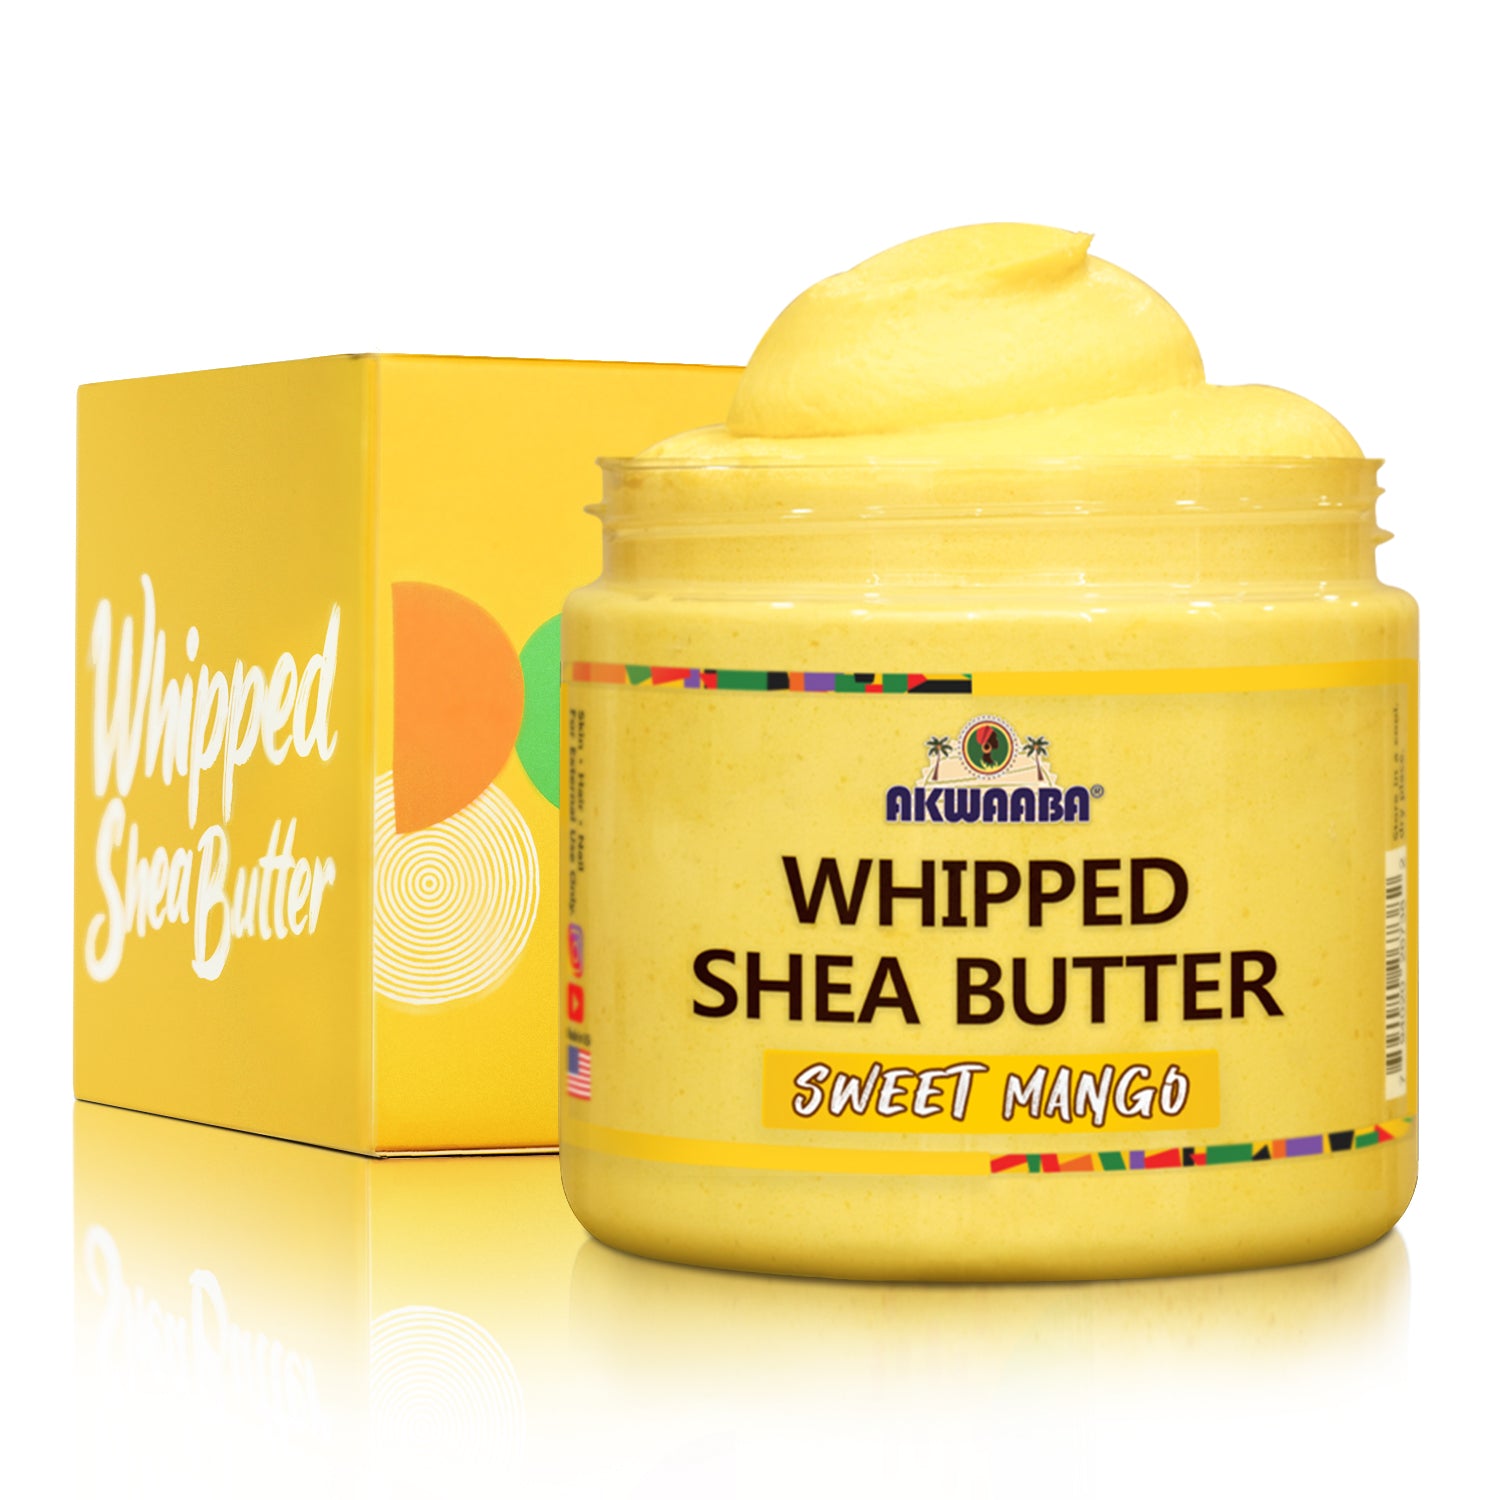 AKWAABA Whipped Shea Butter(Sweet Mango) 12oz